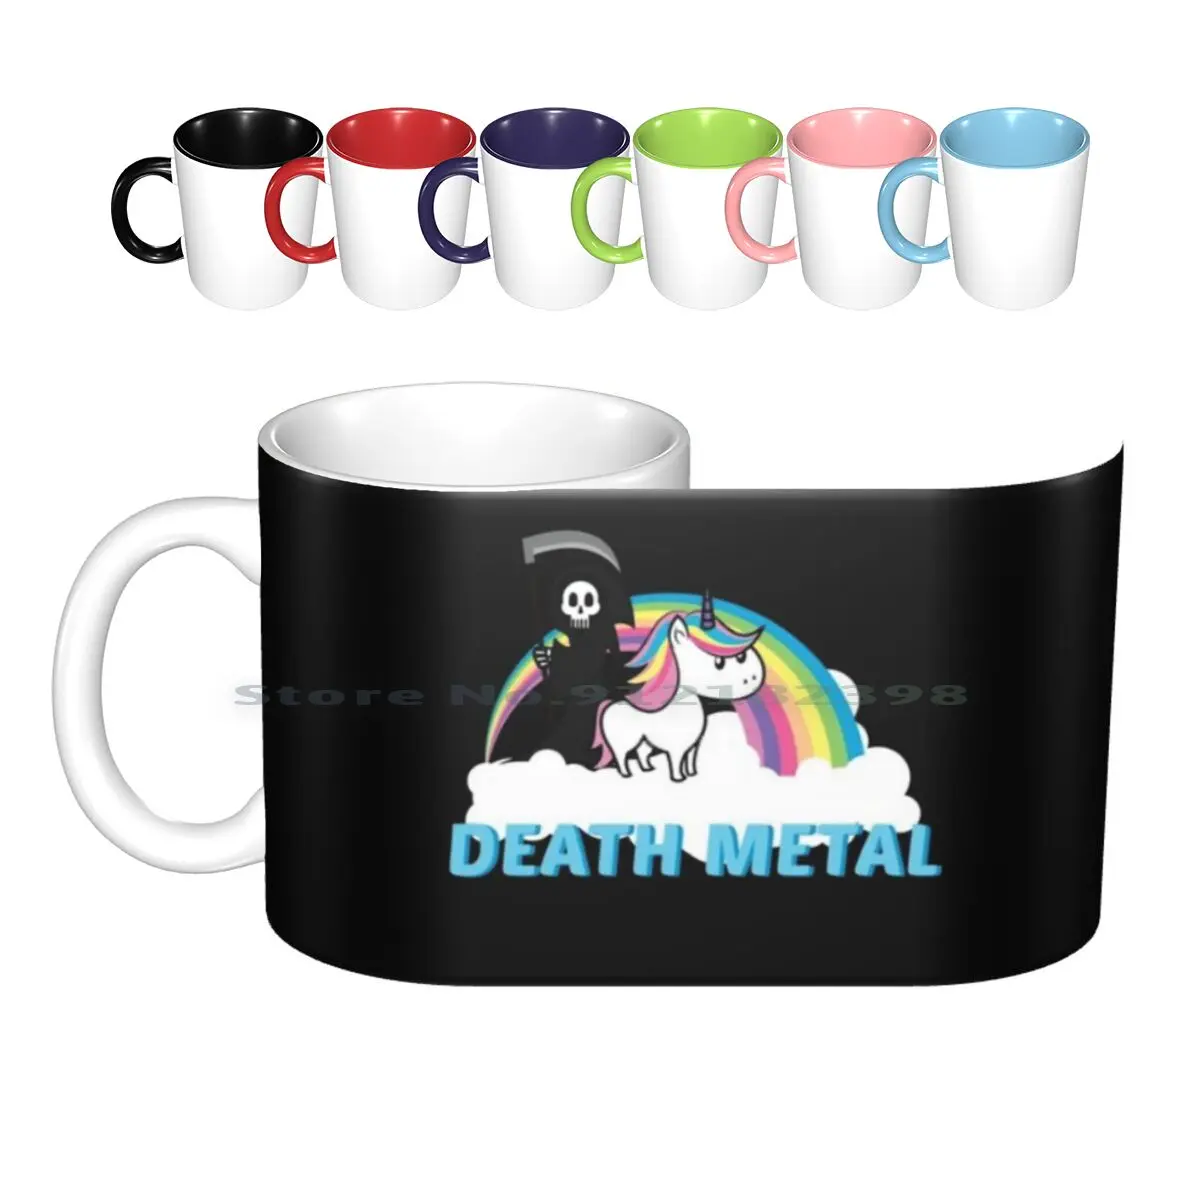 

Funny Death Metal Shirt Ceramic Mugs Coffee Cups Milk Tea Mug Punk Grunge Retro Goth Vintage Cool Music Tape Black Emo Guitar